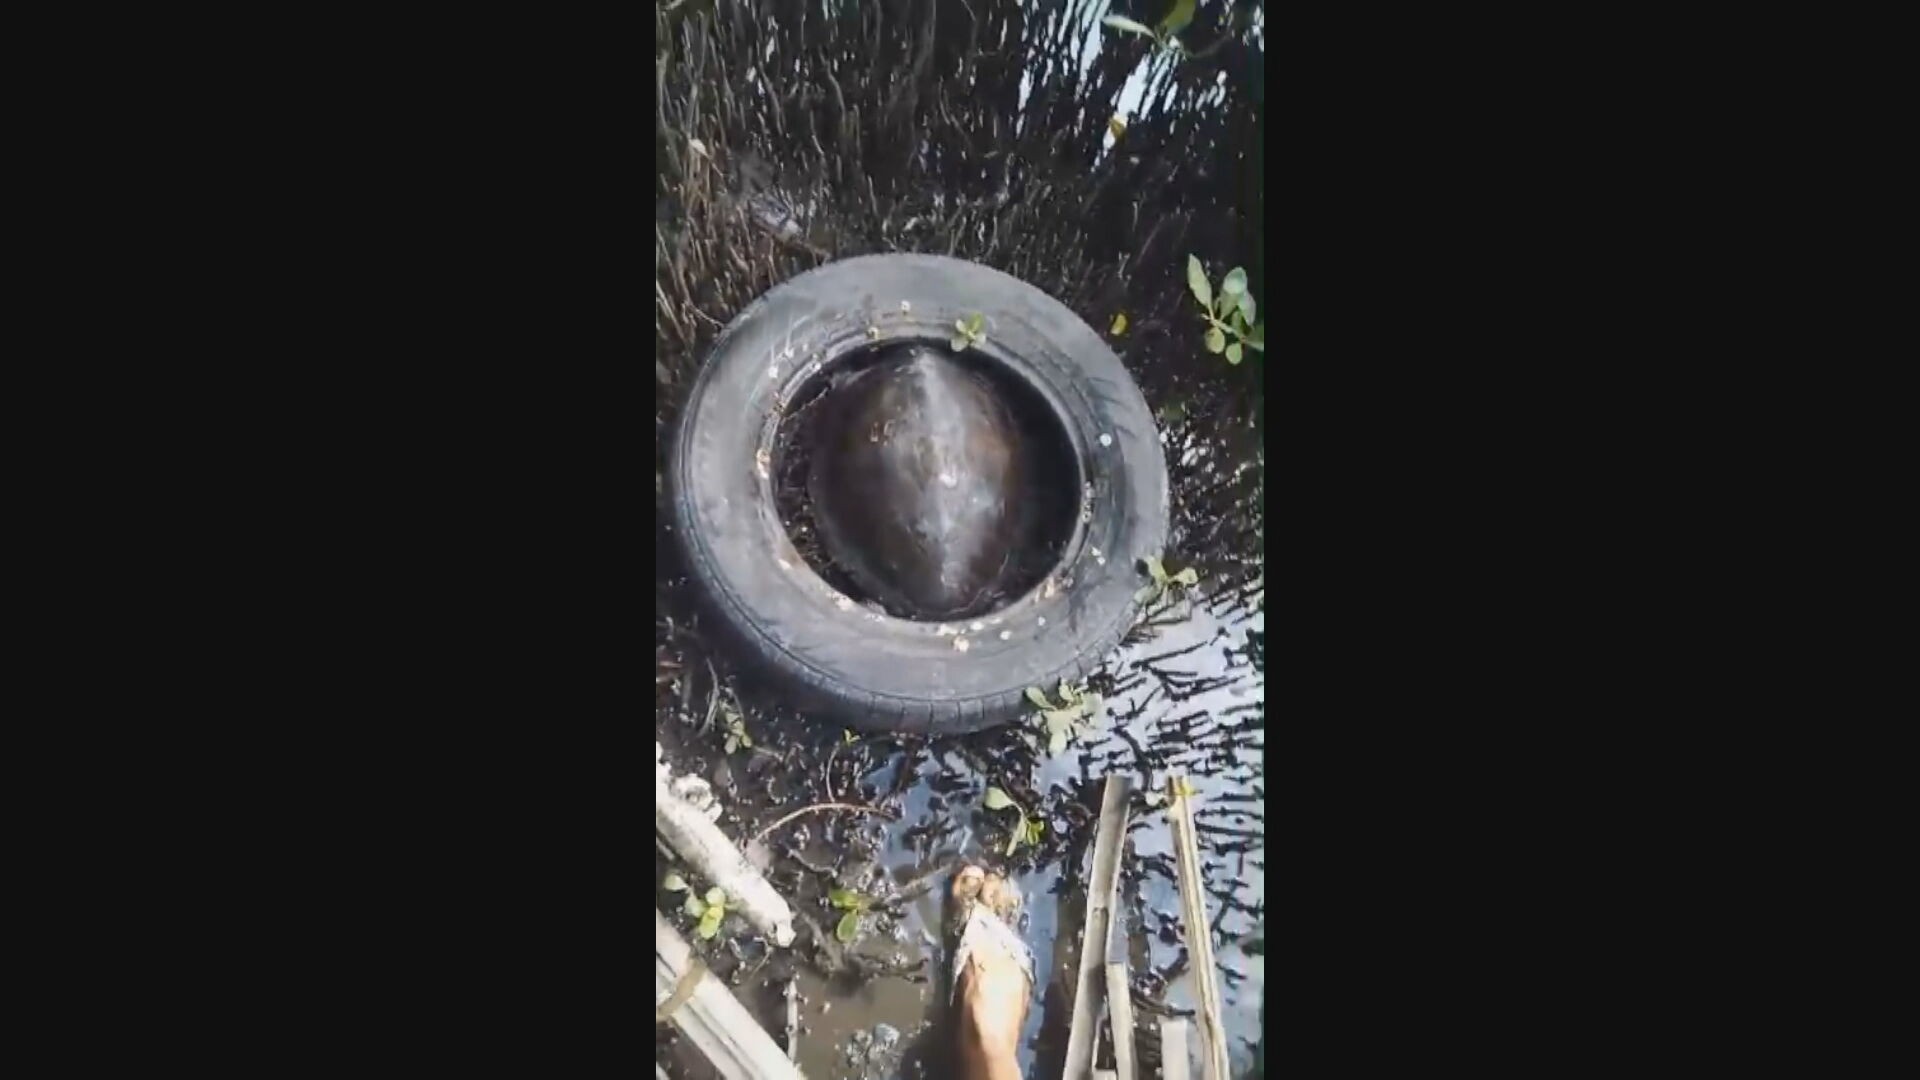 VÍDEO: pescador salva tartaruga presa em pneu na Baía de Guanabara